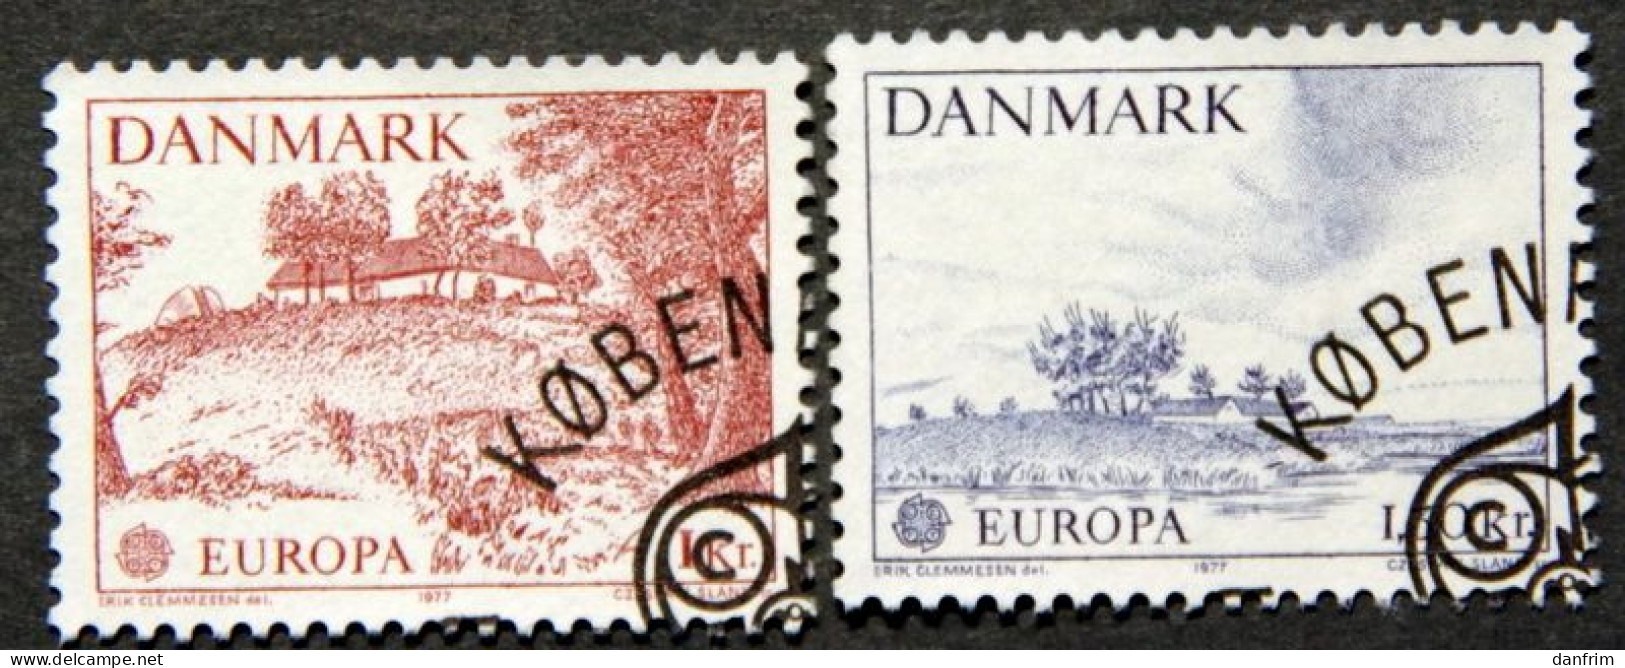 Danmark 1977 EUROPA  MiNr.639-40  (O). (lot K 660 ) - Usado